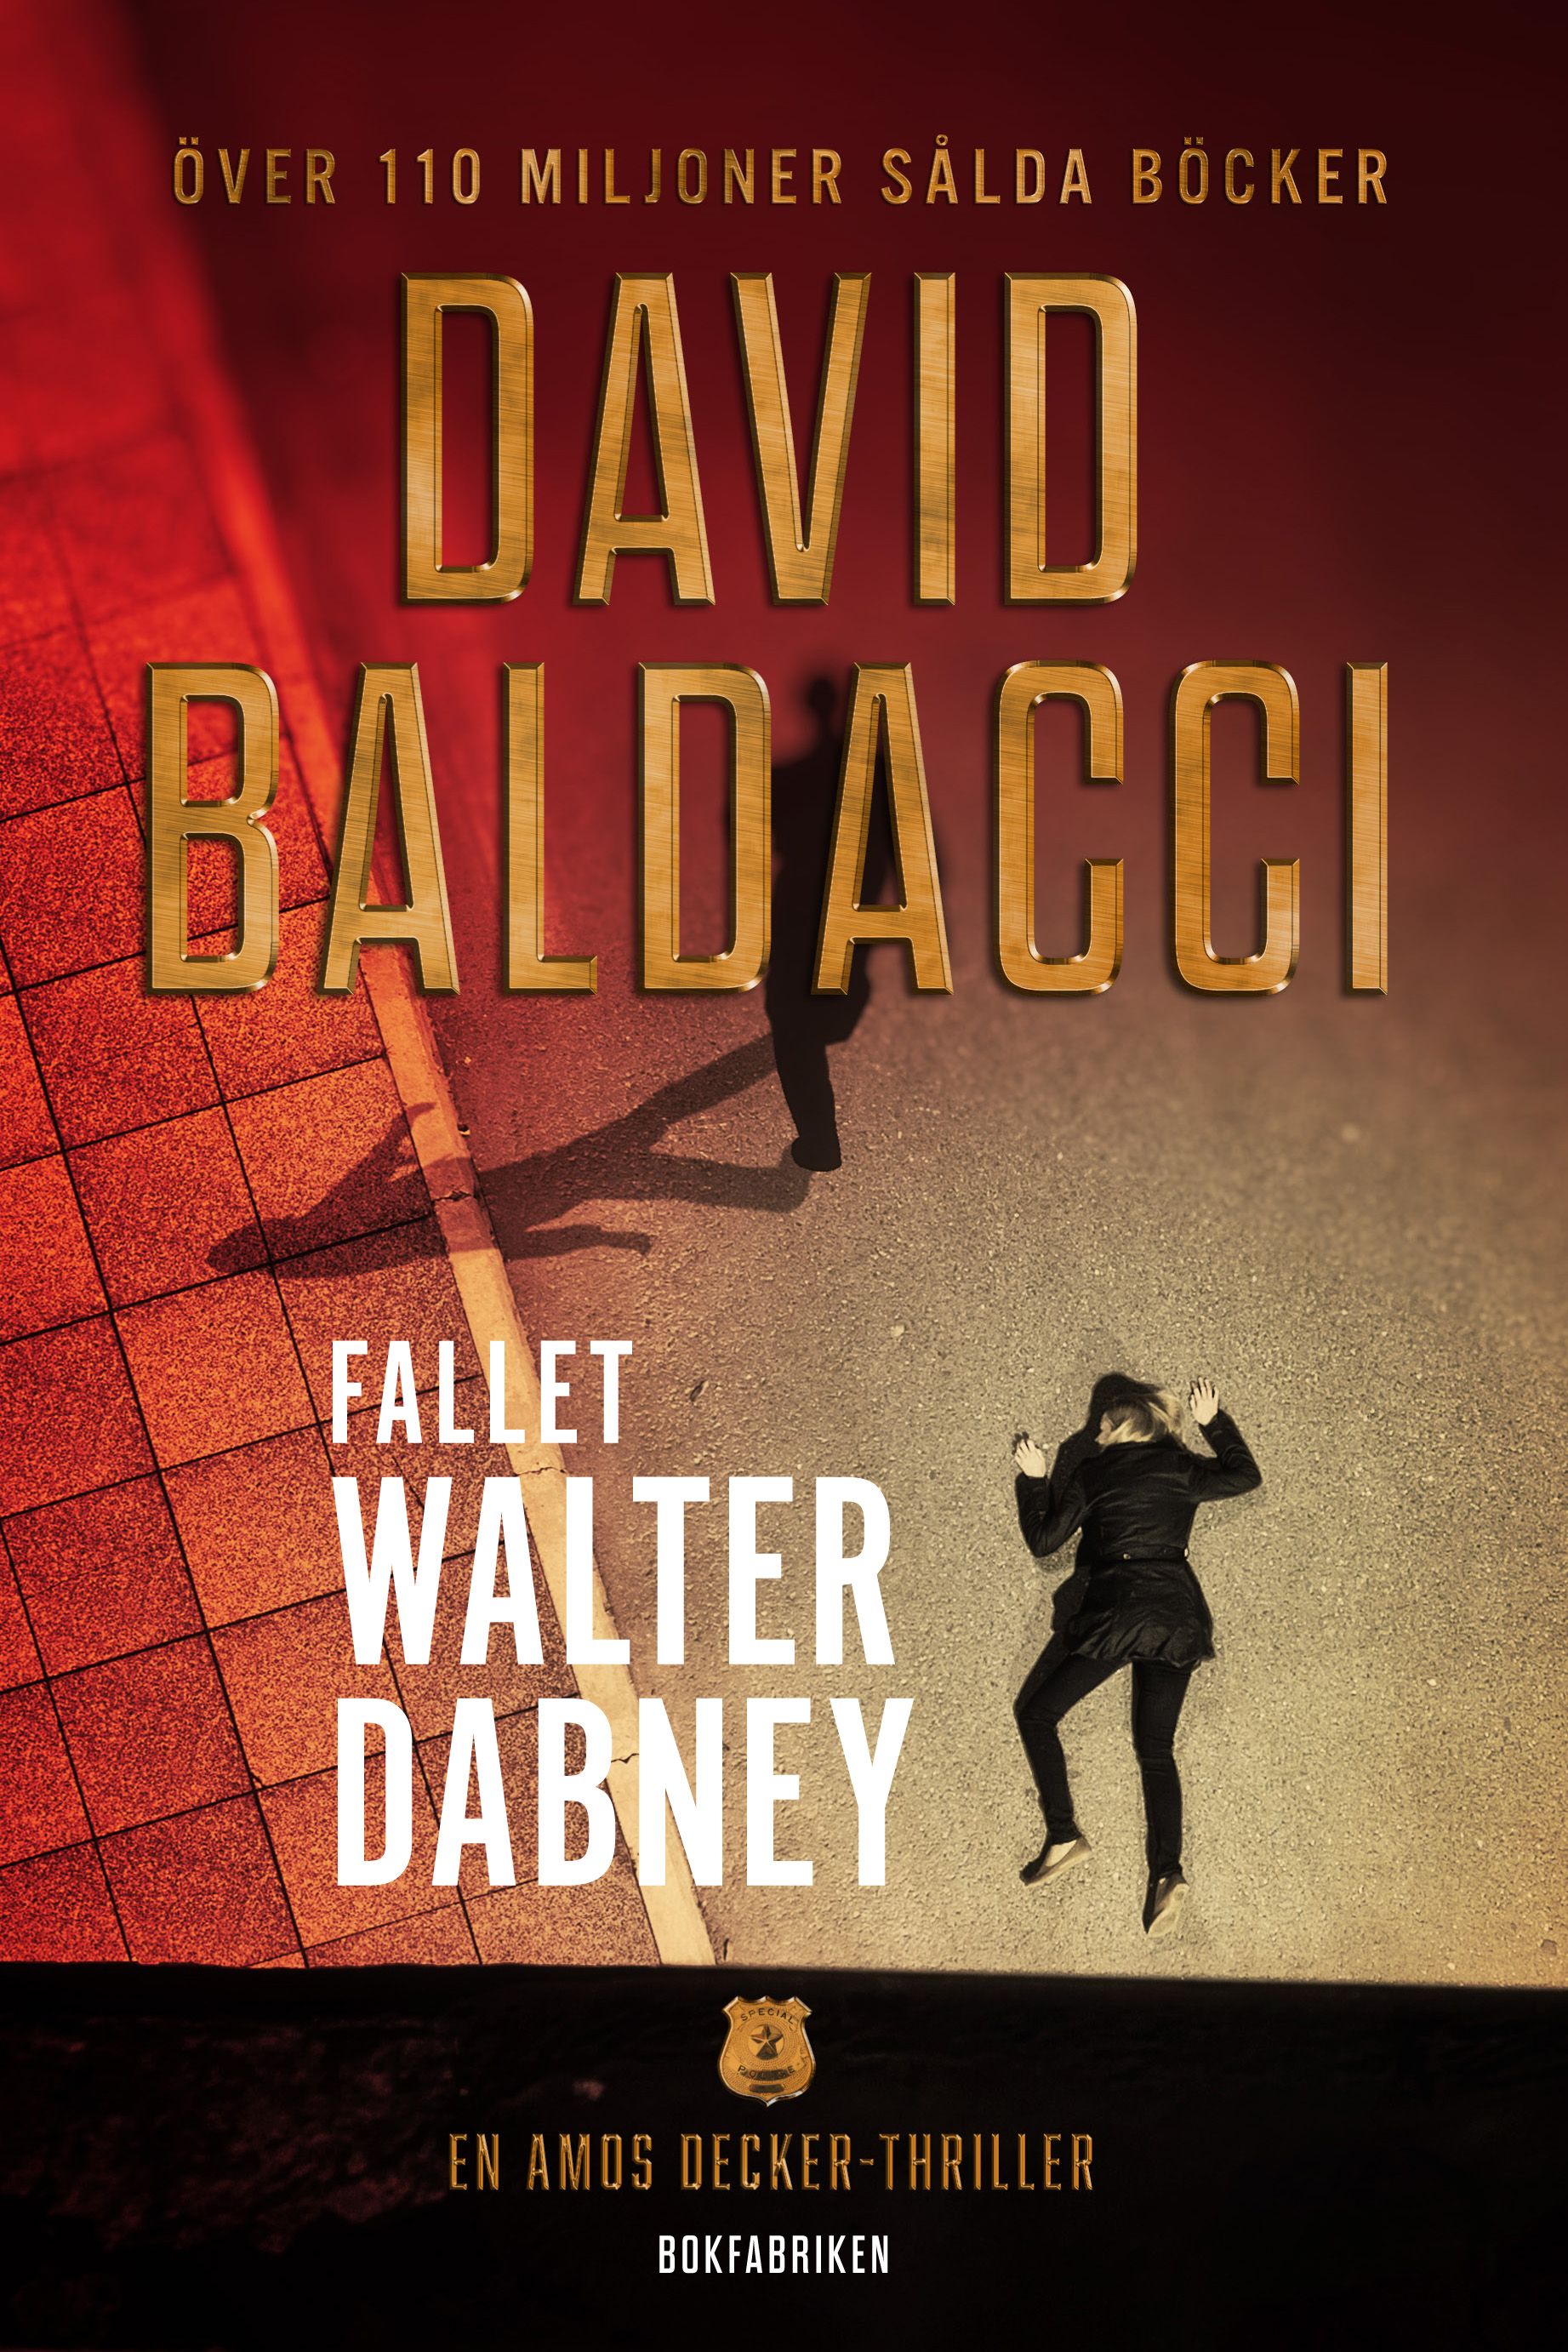 Fallet Walter Dabney, eBook by David Baldacci